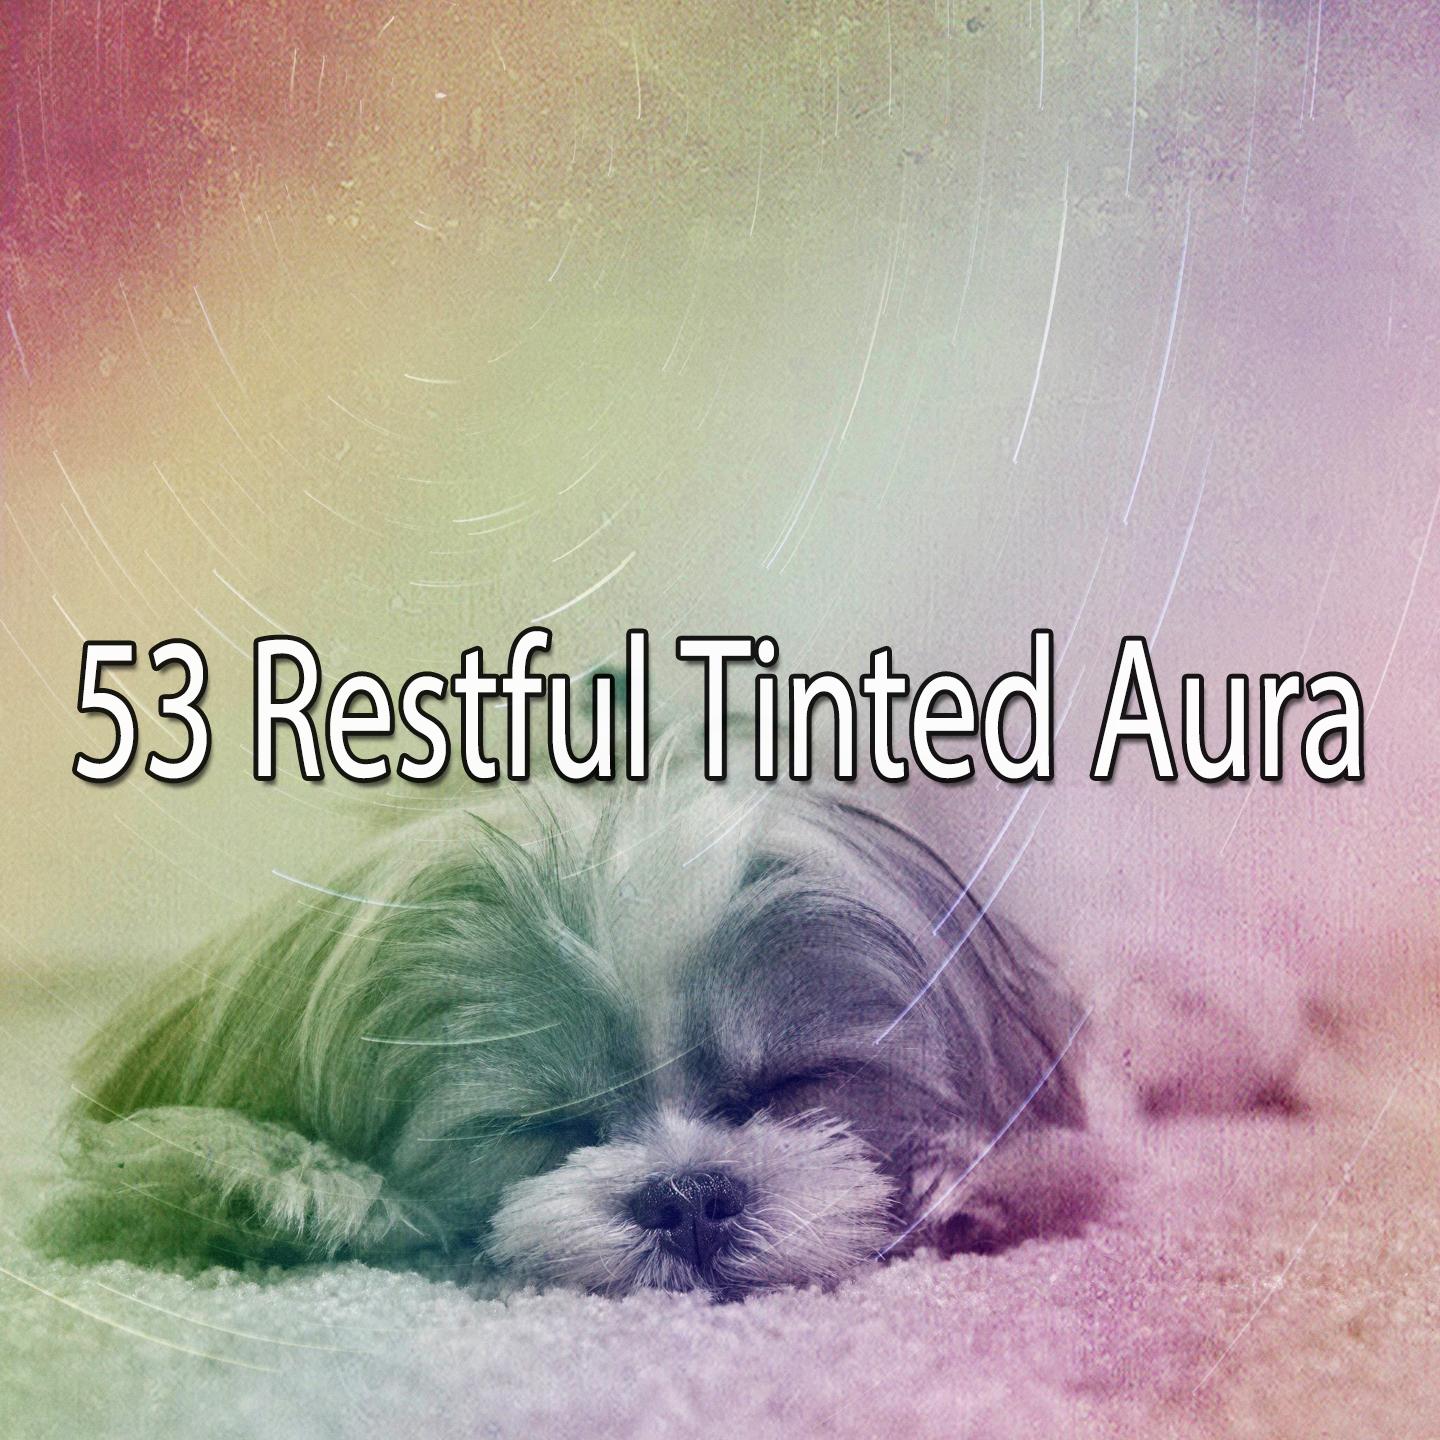 53 Restful Tinted Aura